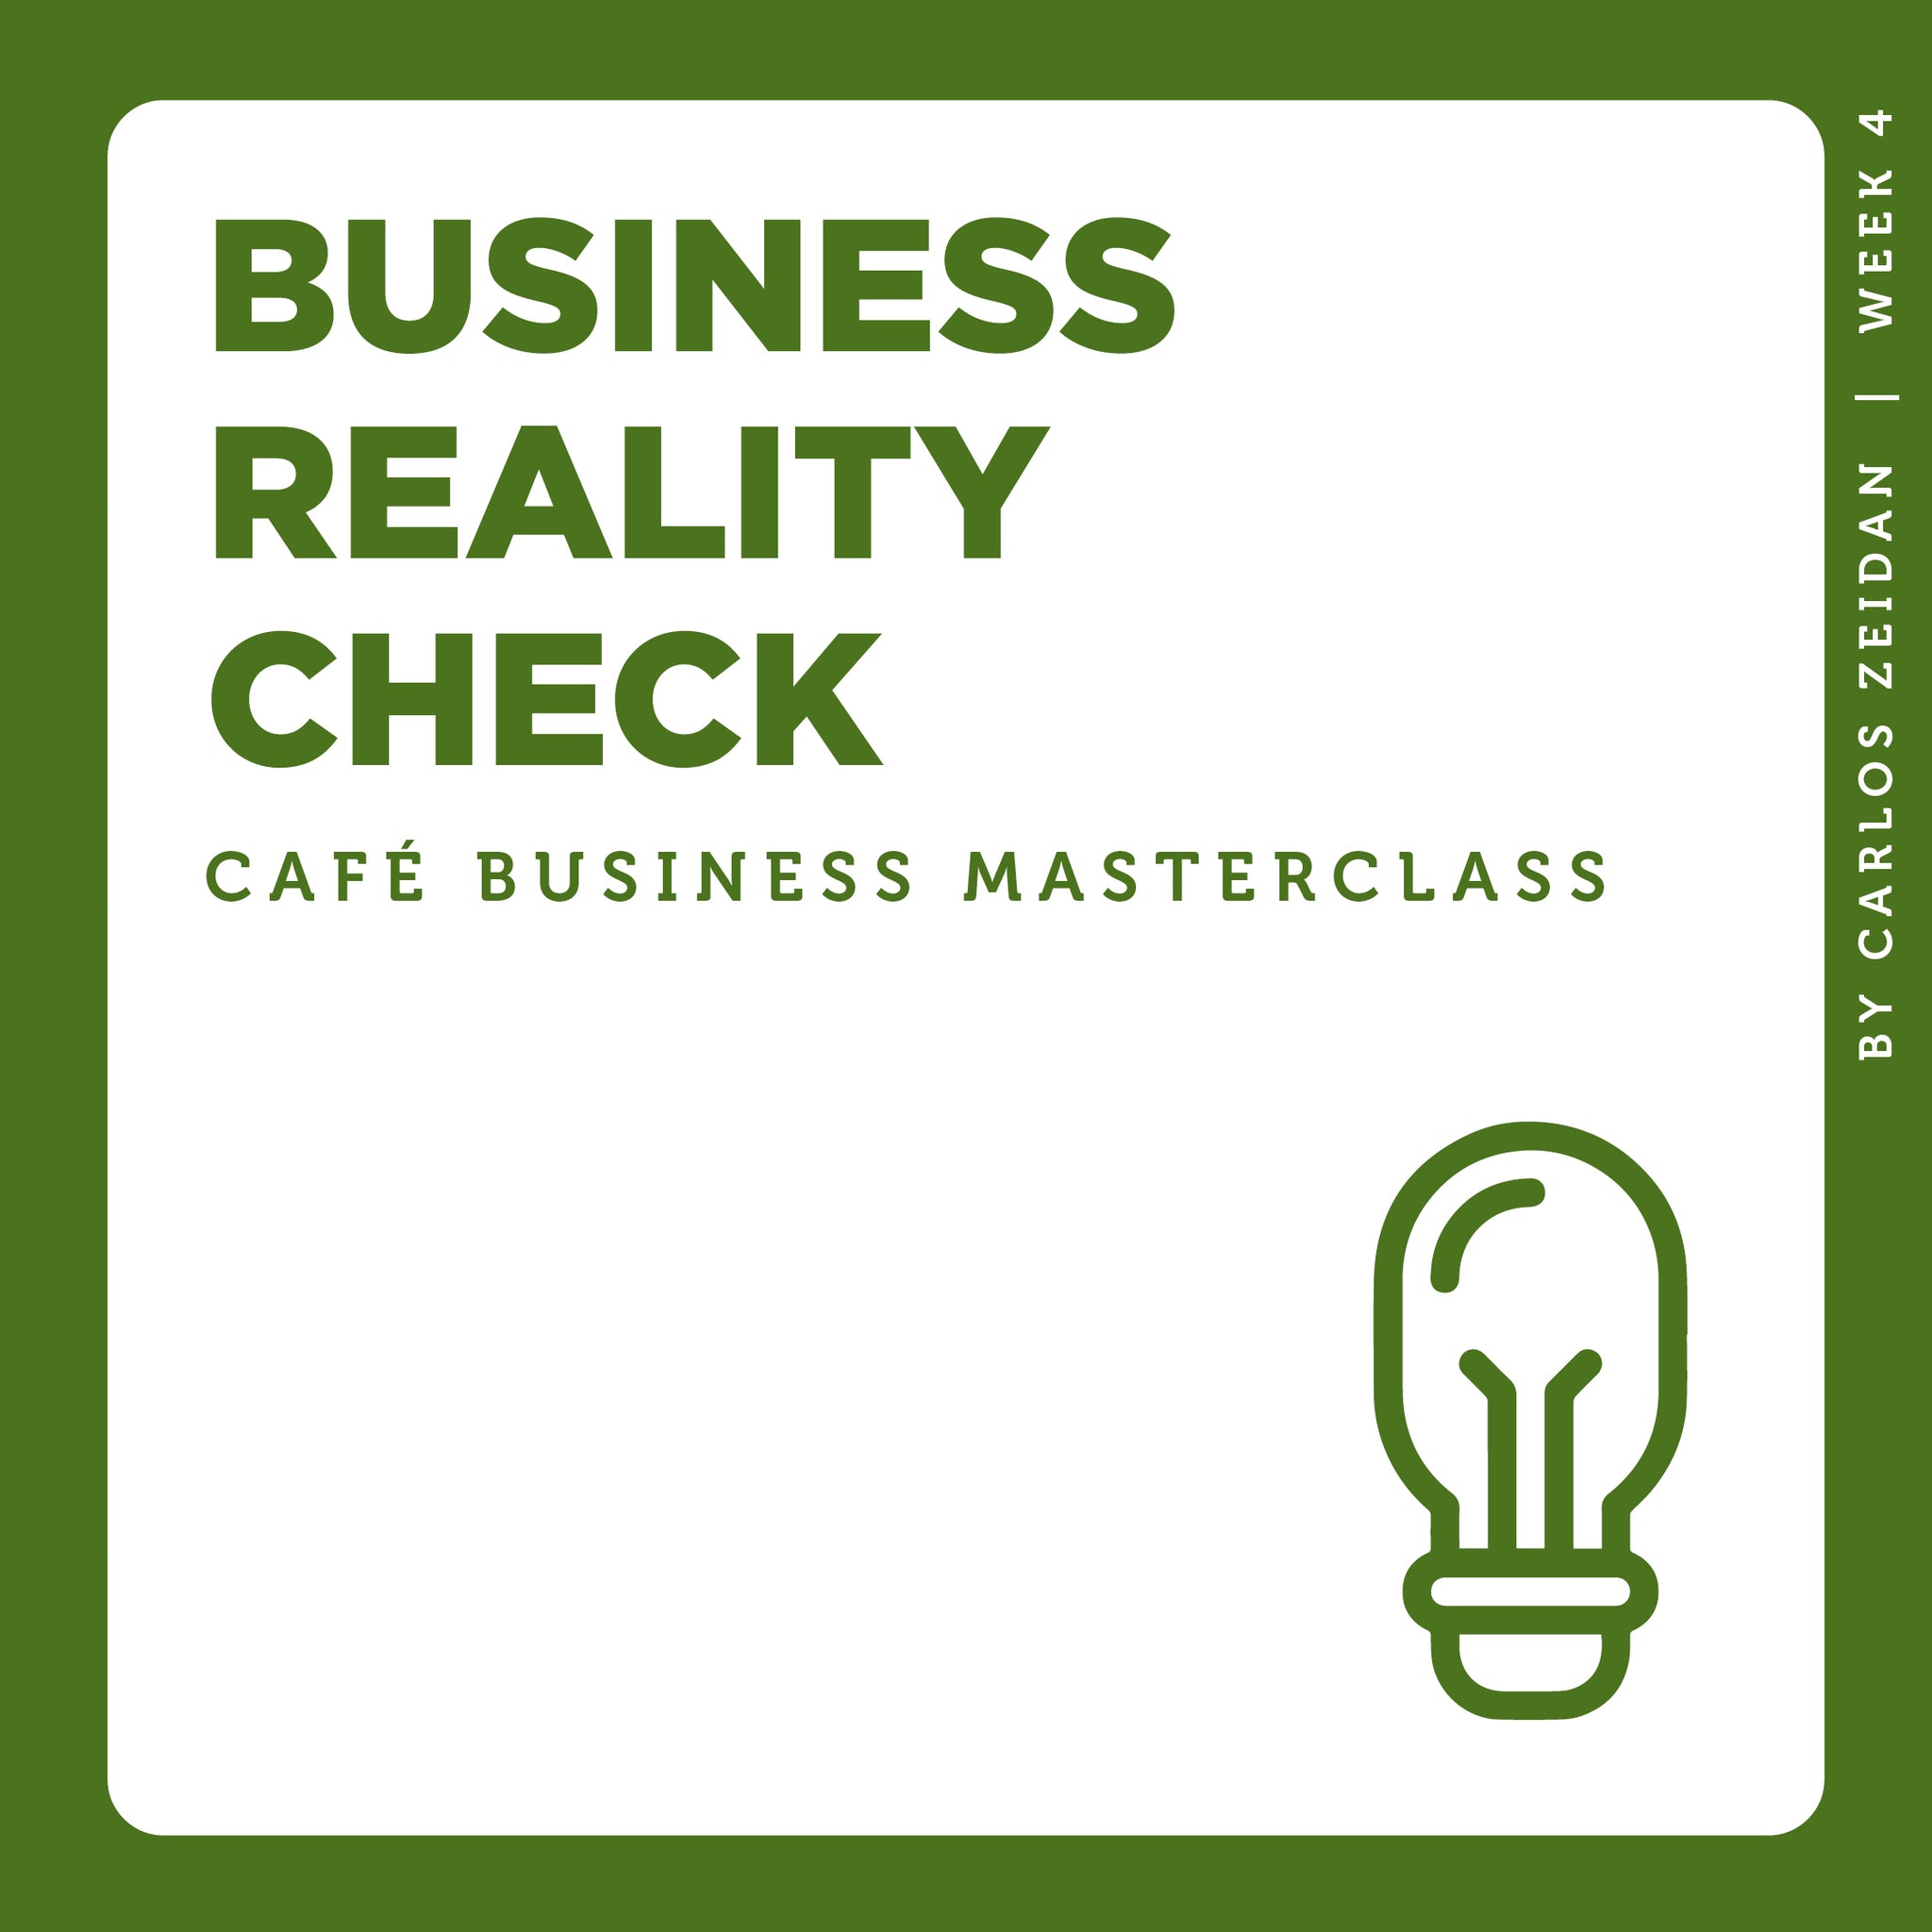 Café Business Masterclass: Business Reality Check